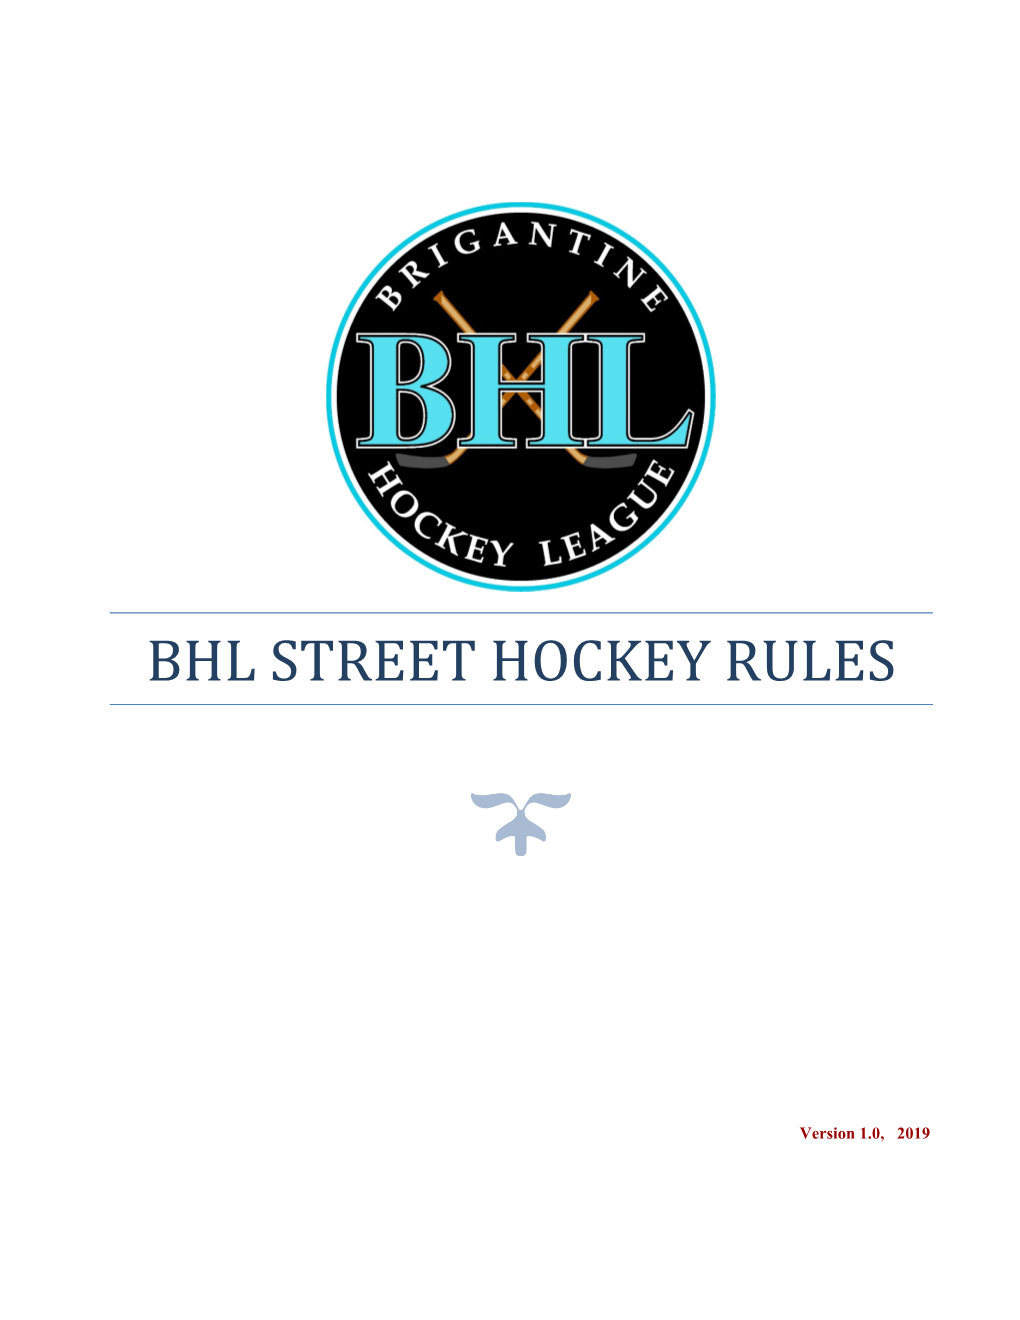 Bhl Street Hockey Rules